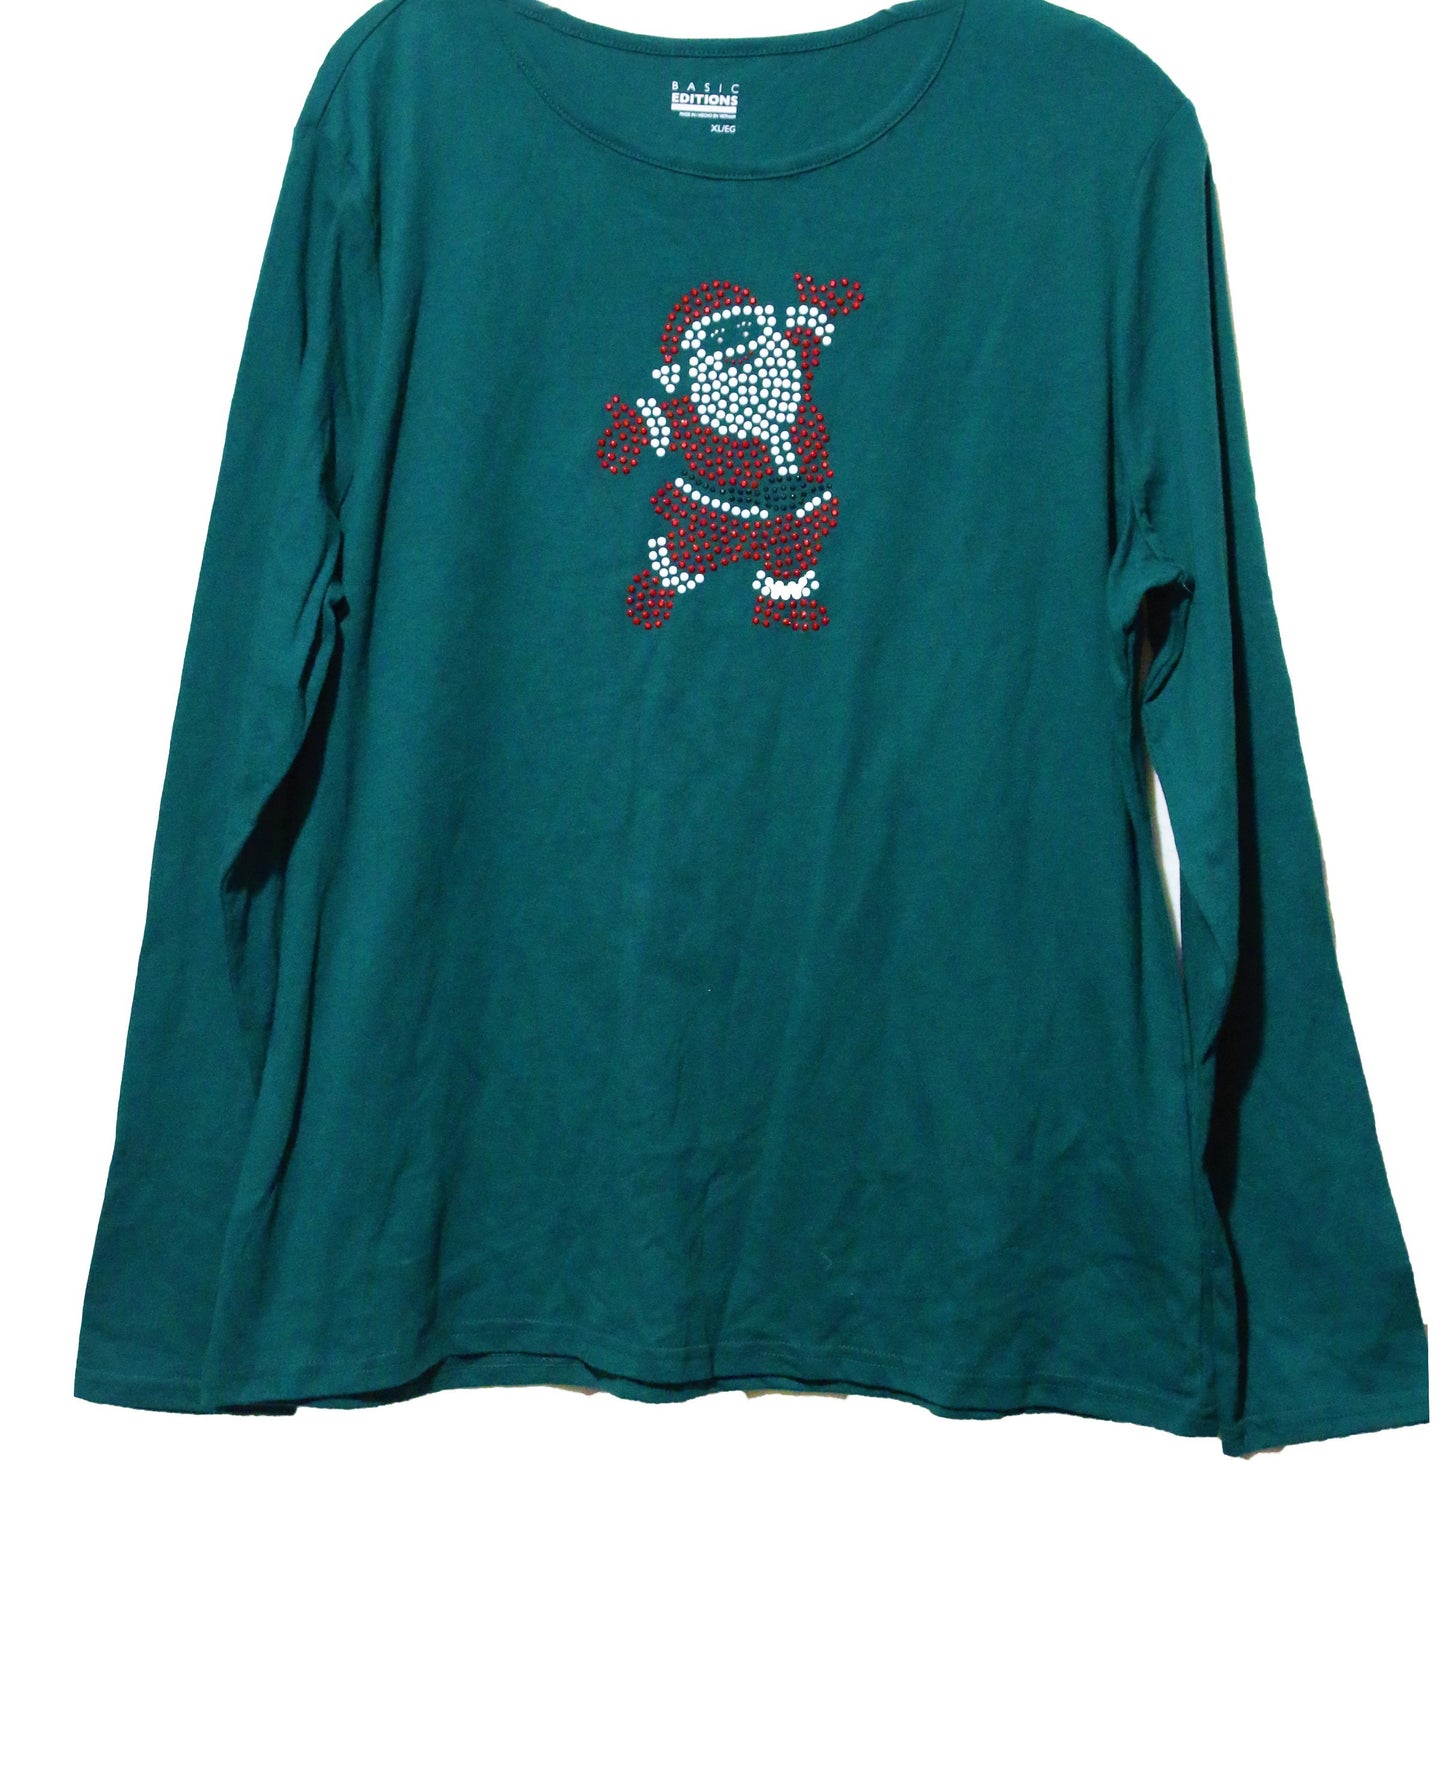 Women's Green Long sleeve Santa Shirt